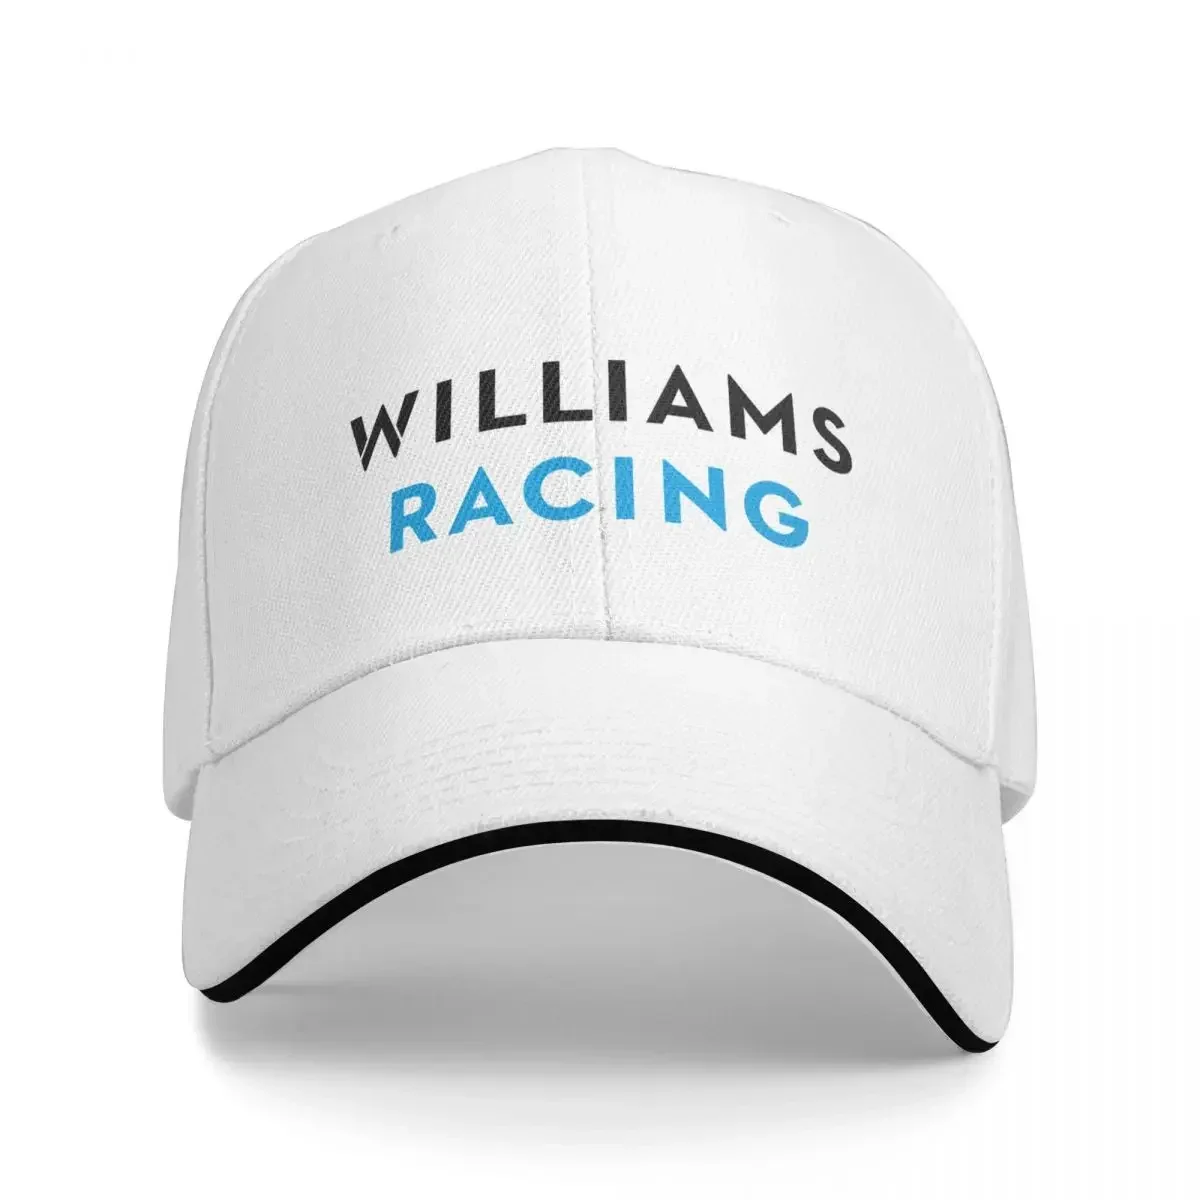 

Williams Racing F1 Full Team Logo Cap Baseball Cap rave Snap back hat new hat women's cap Men's